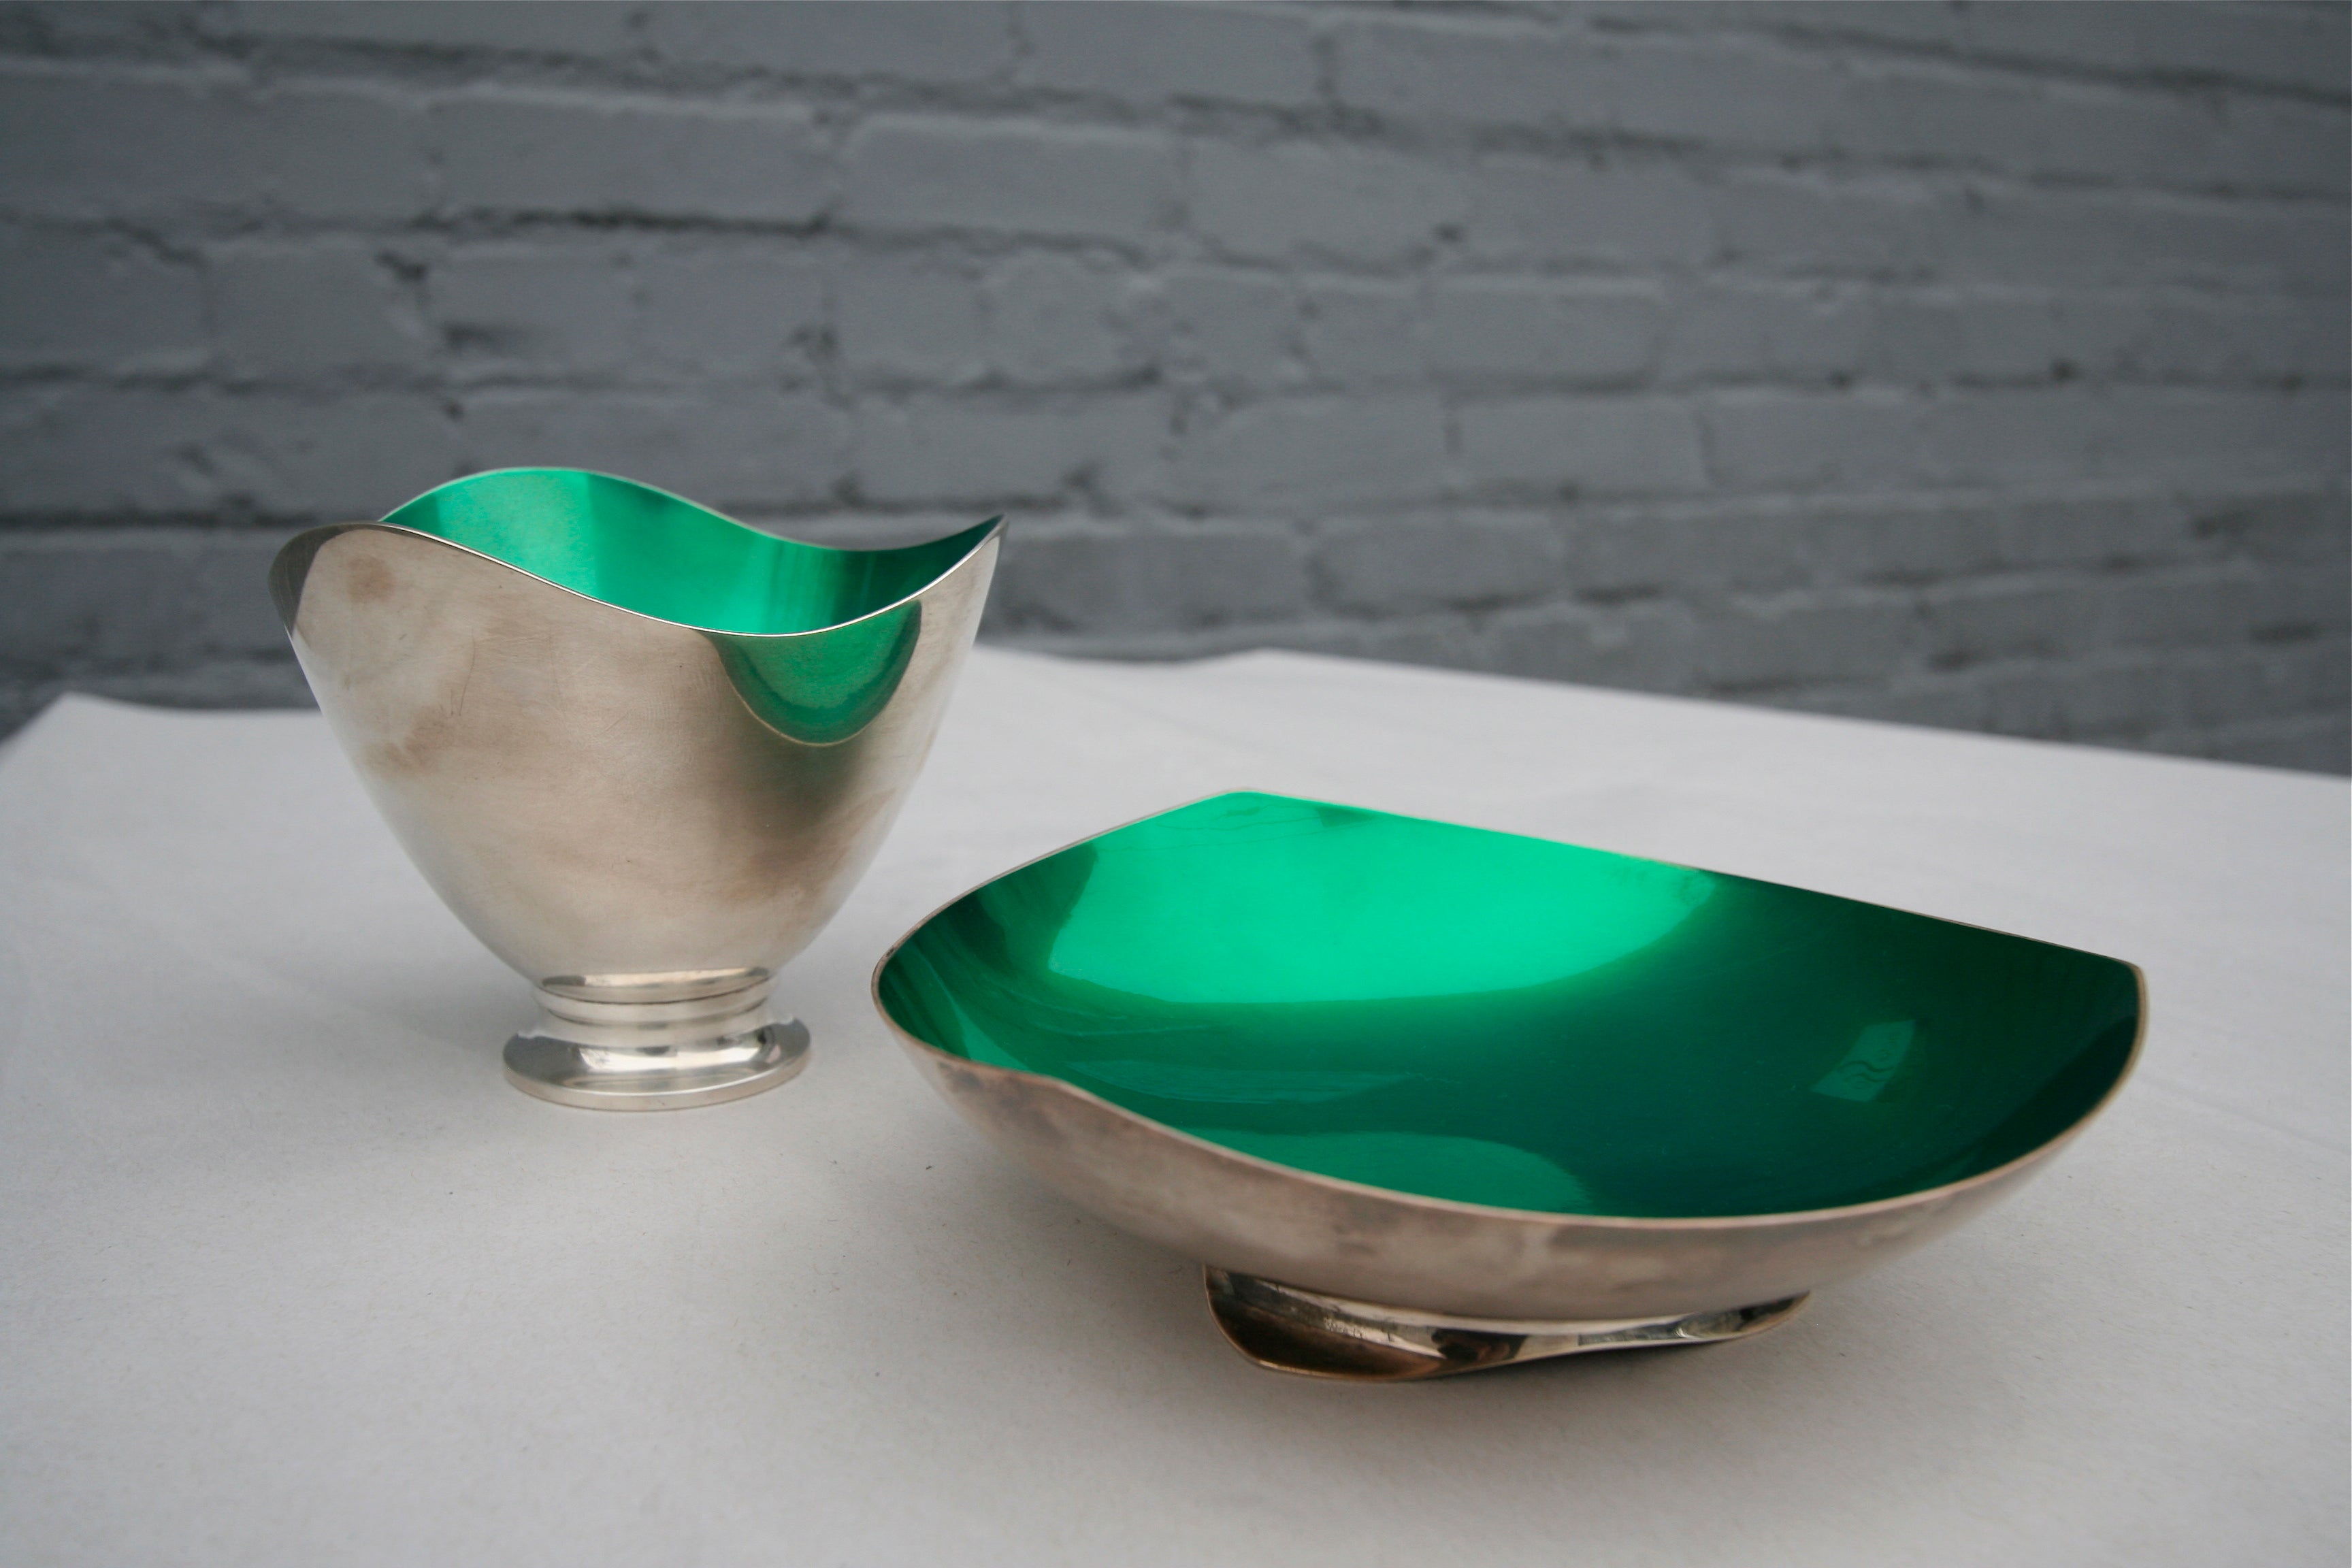 Danish Silver Bowls